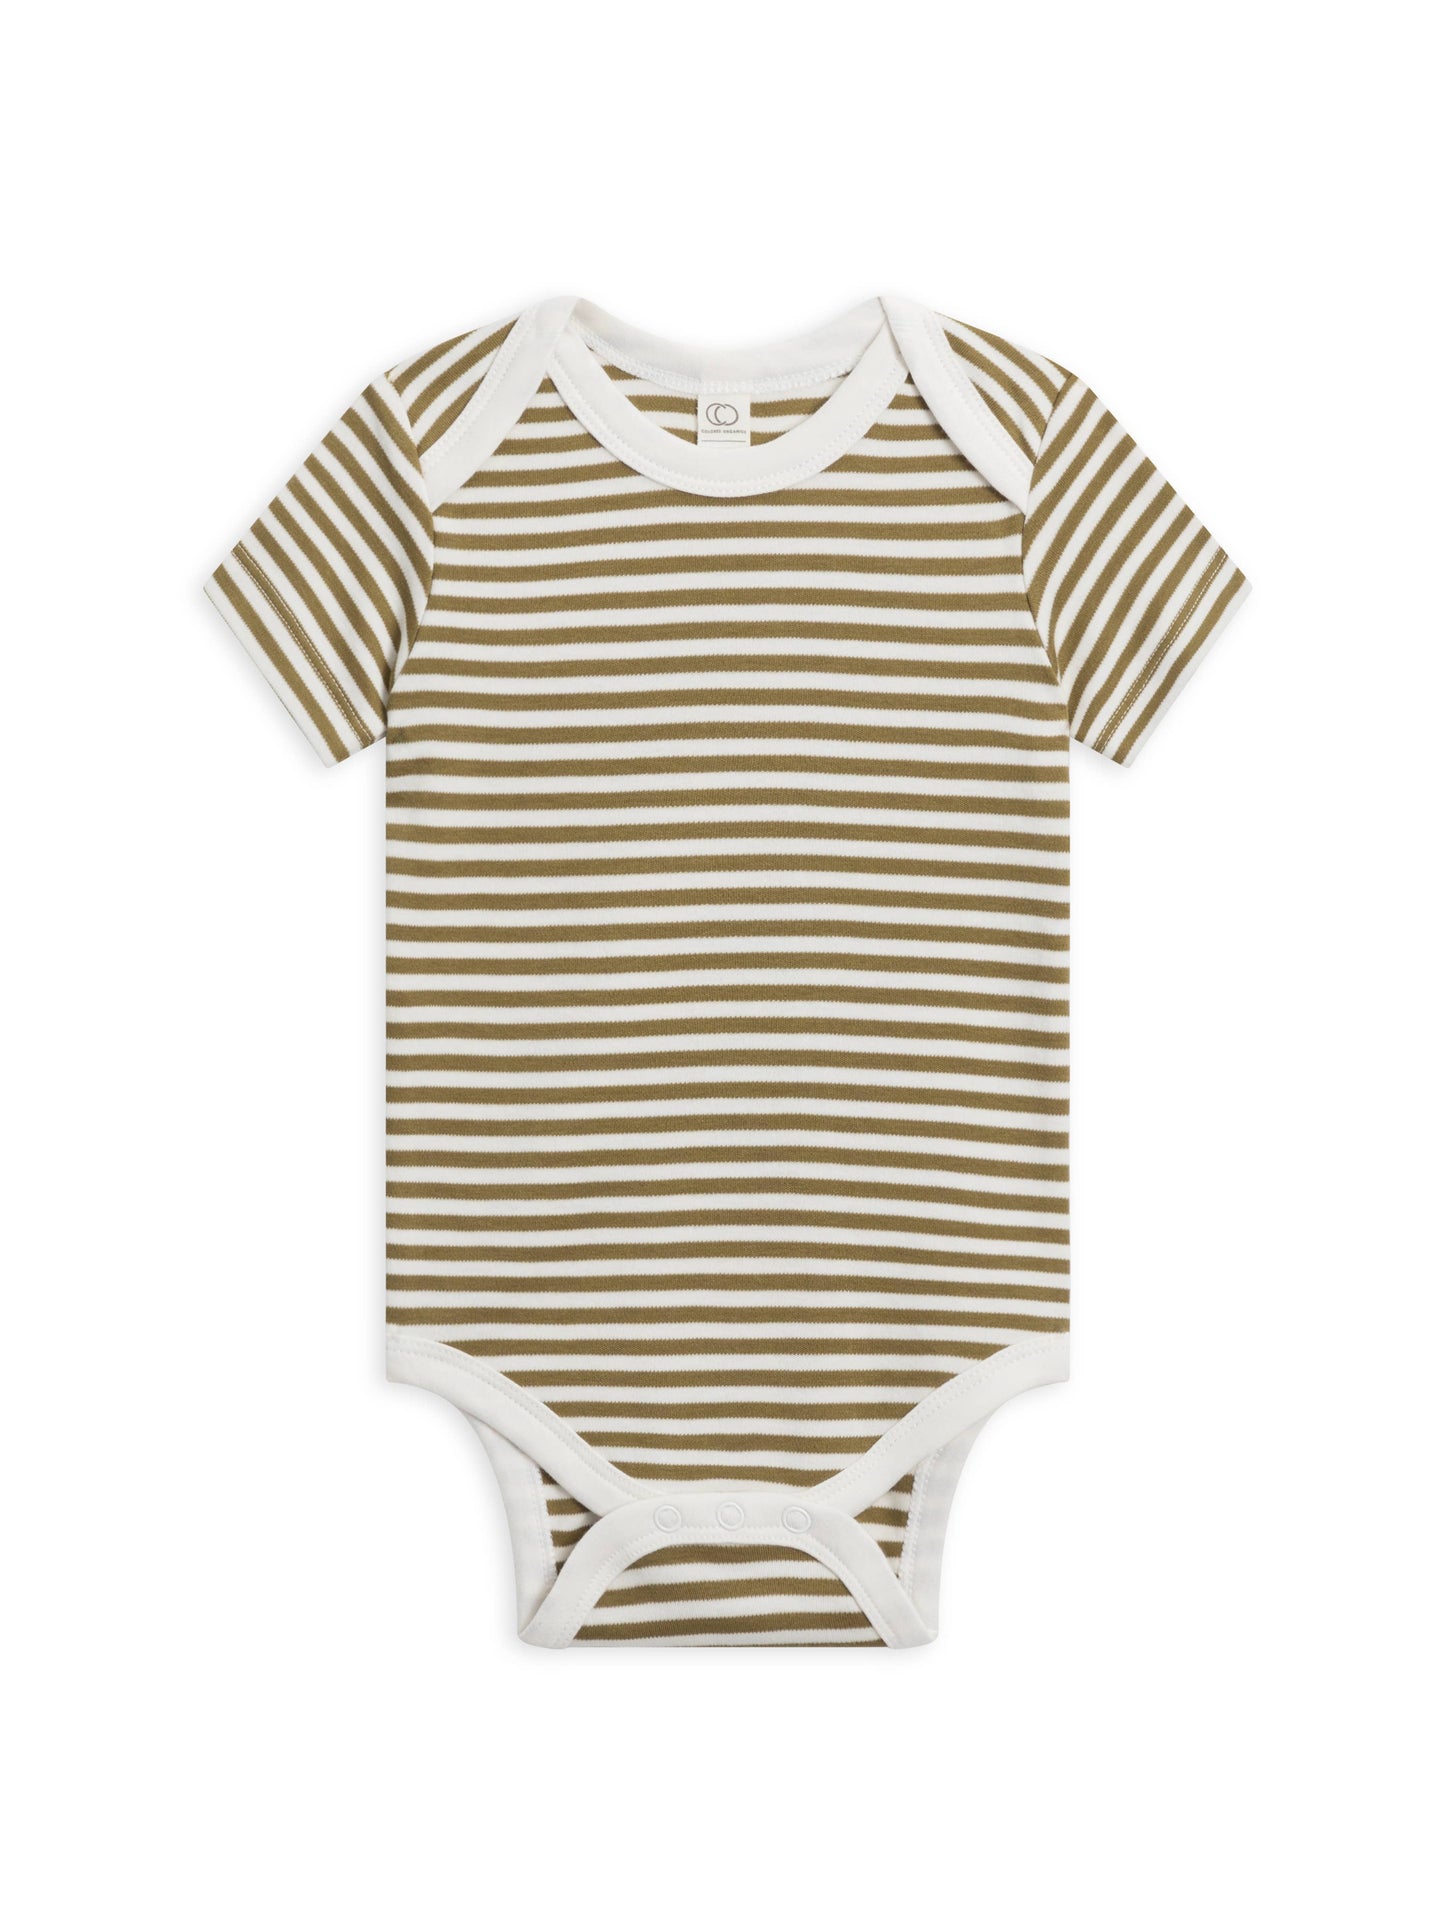 Organic Baby Afton Bodysuit - Greely Stripe / Ivory + Herb